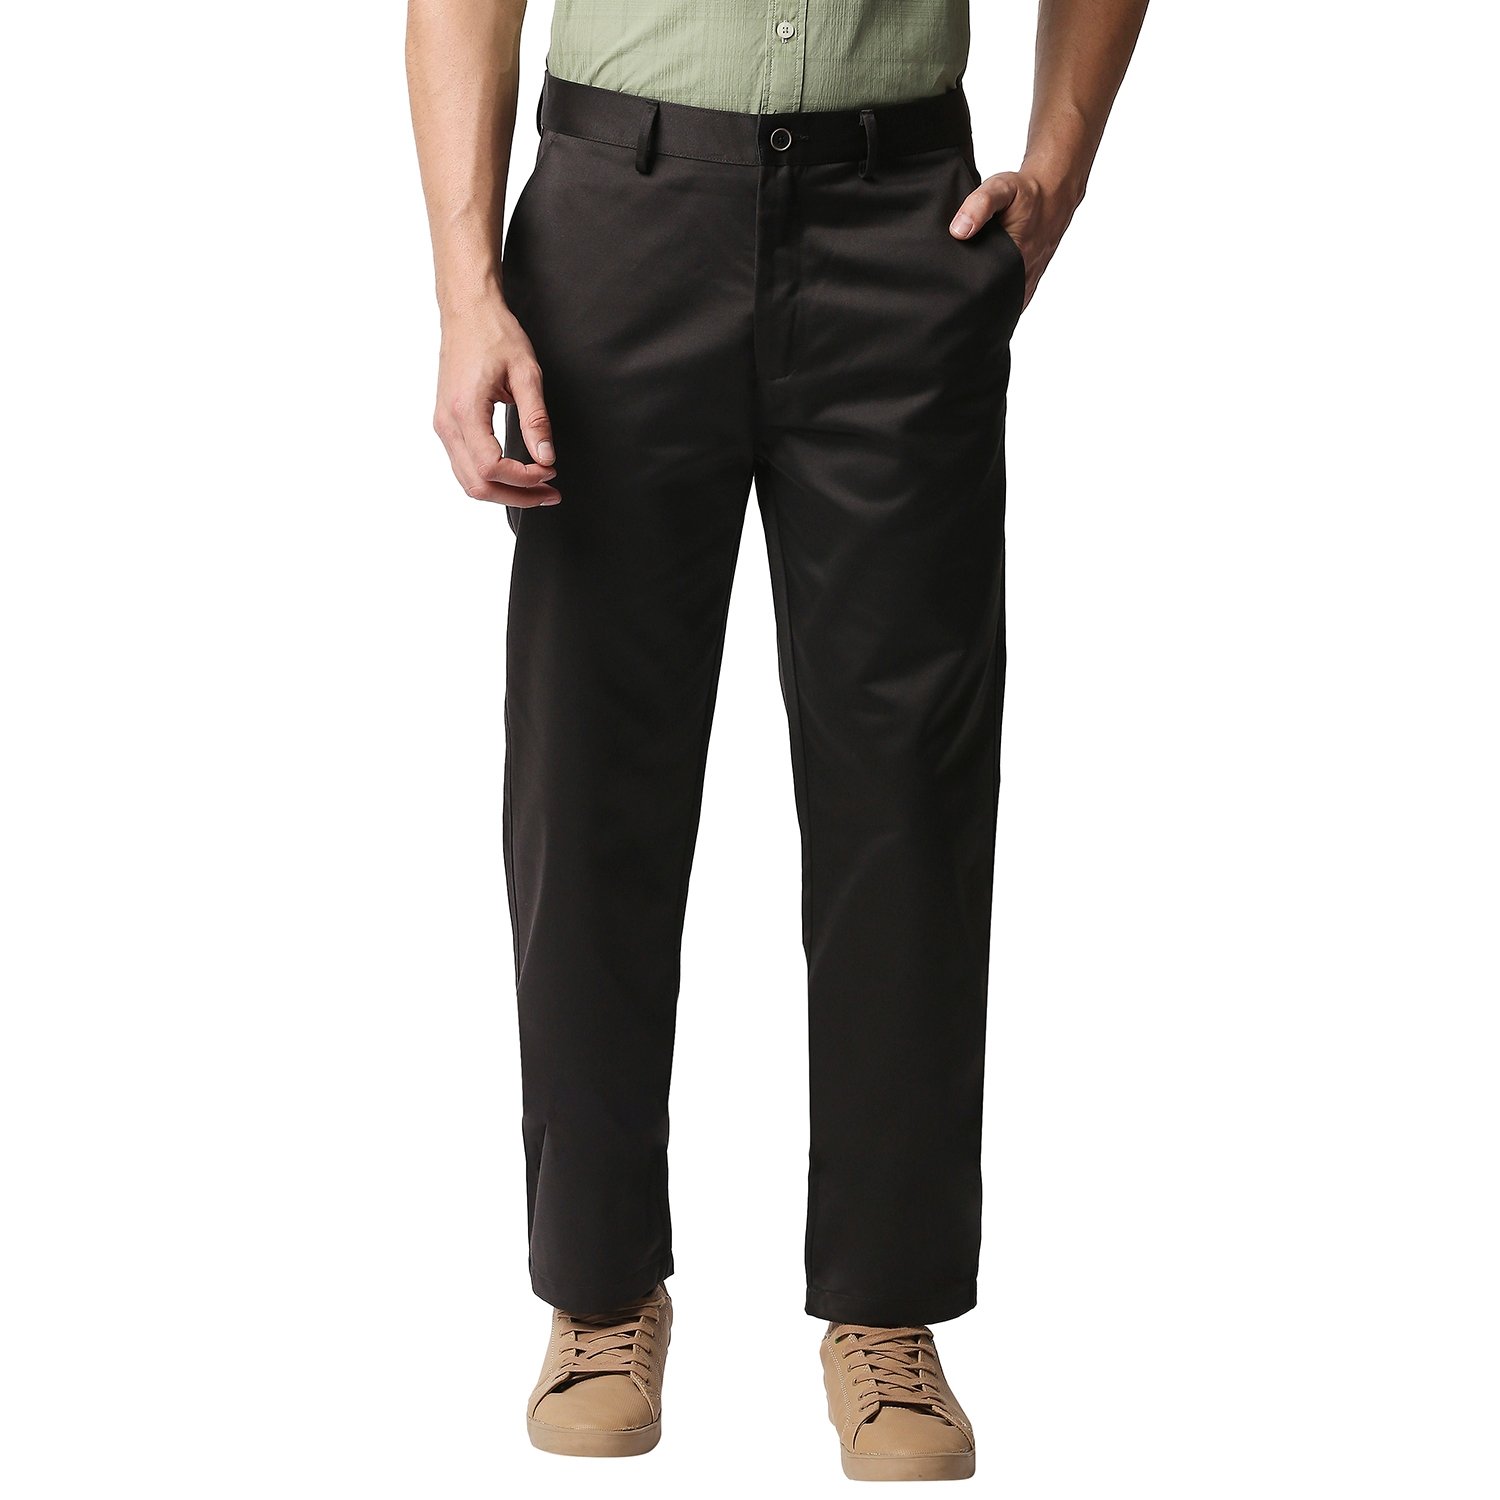 Basics | Basics Comfort Fit Dark Grey Weave Poly Cotton Trousers